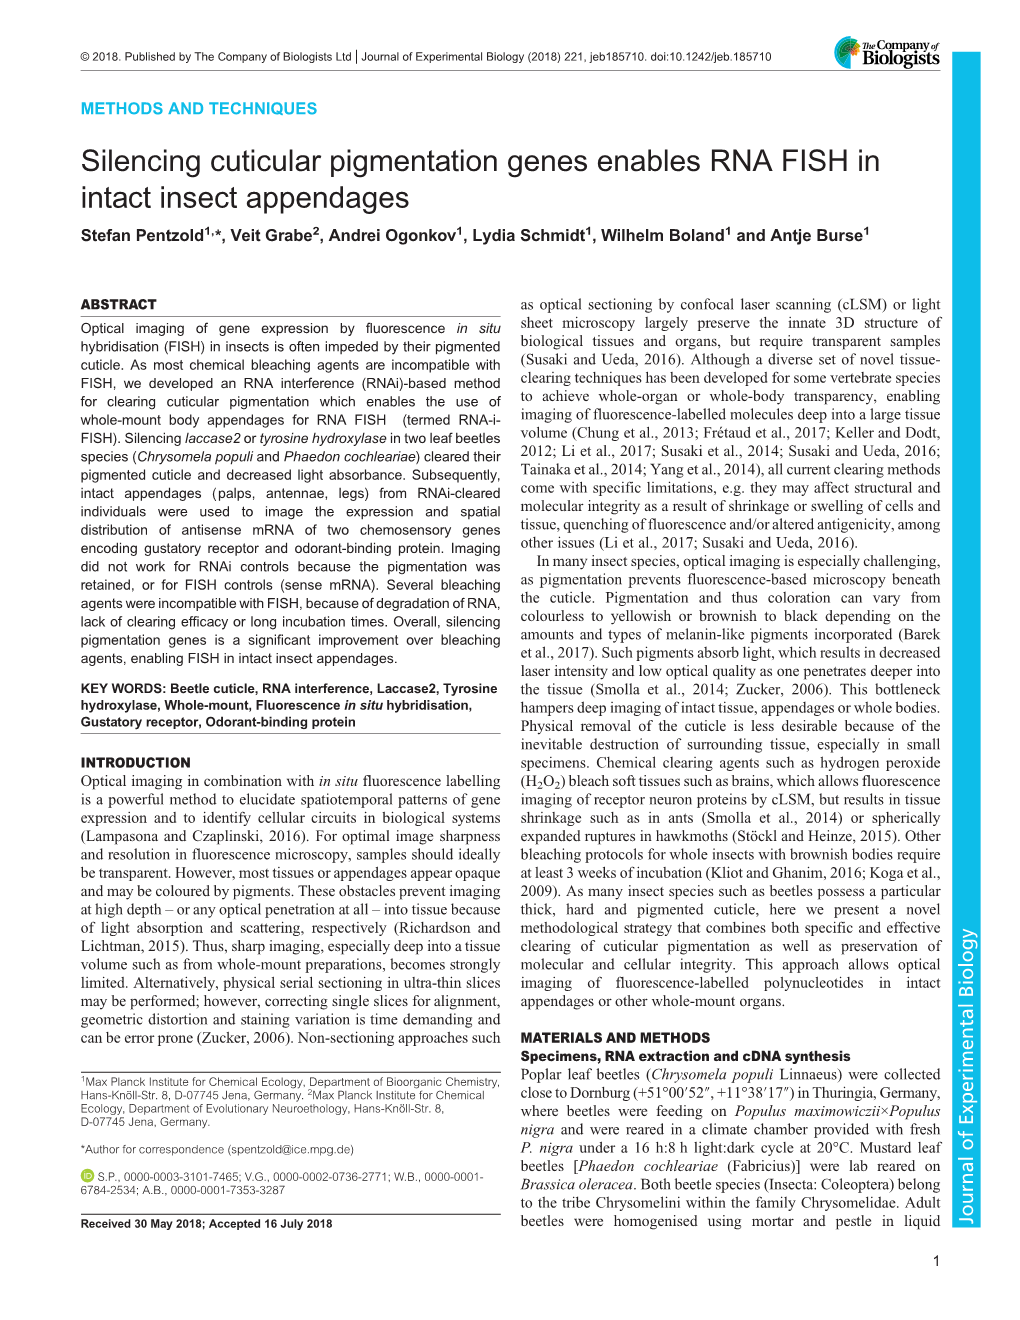 Silencing Cuticular Pigmentation Genes Enables RNA